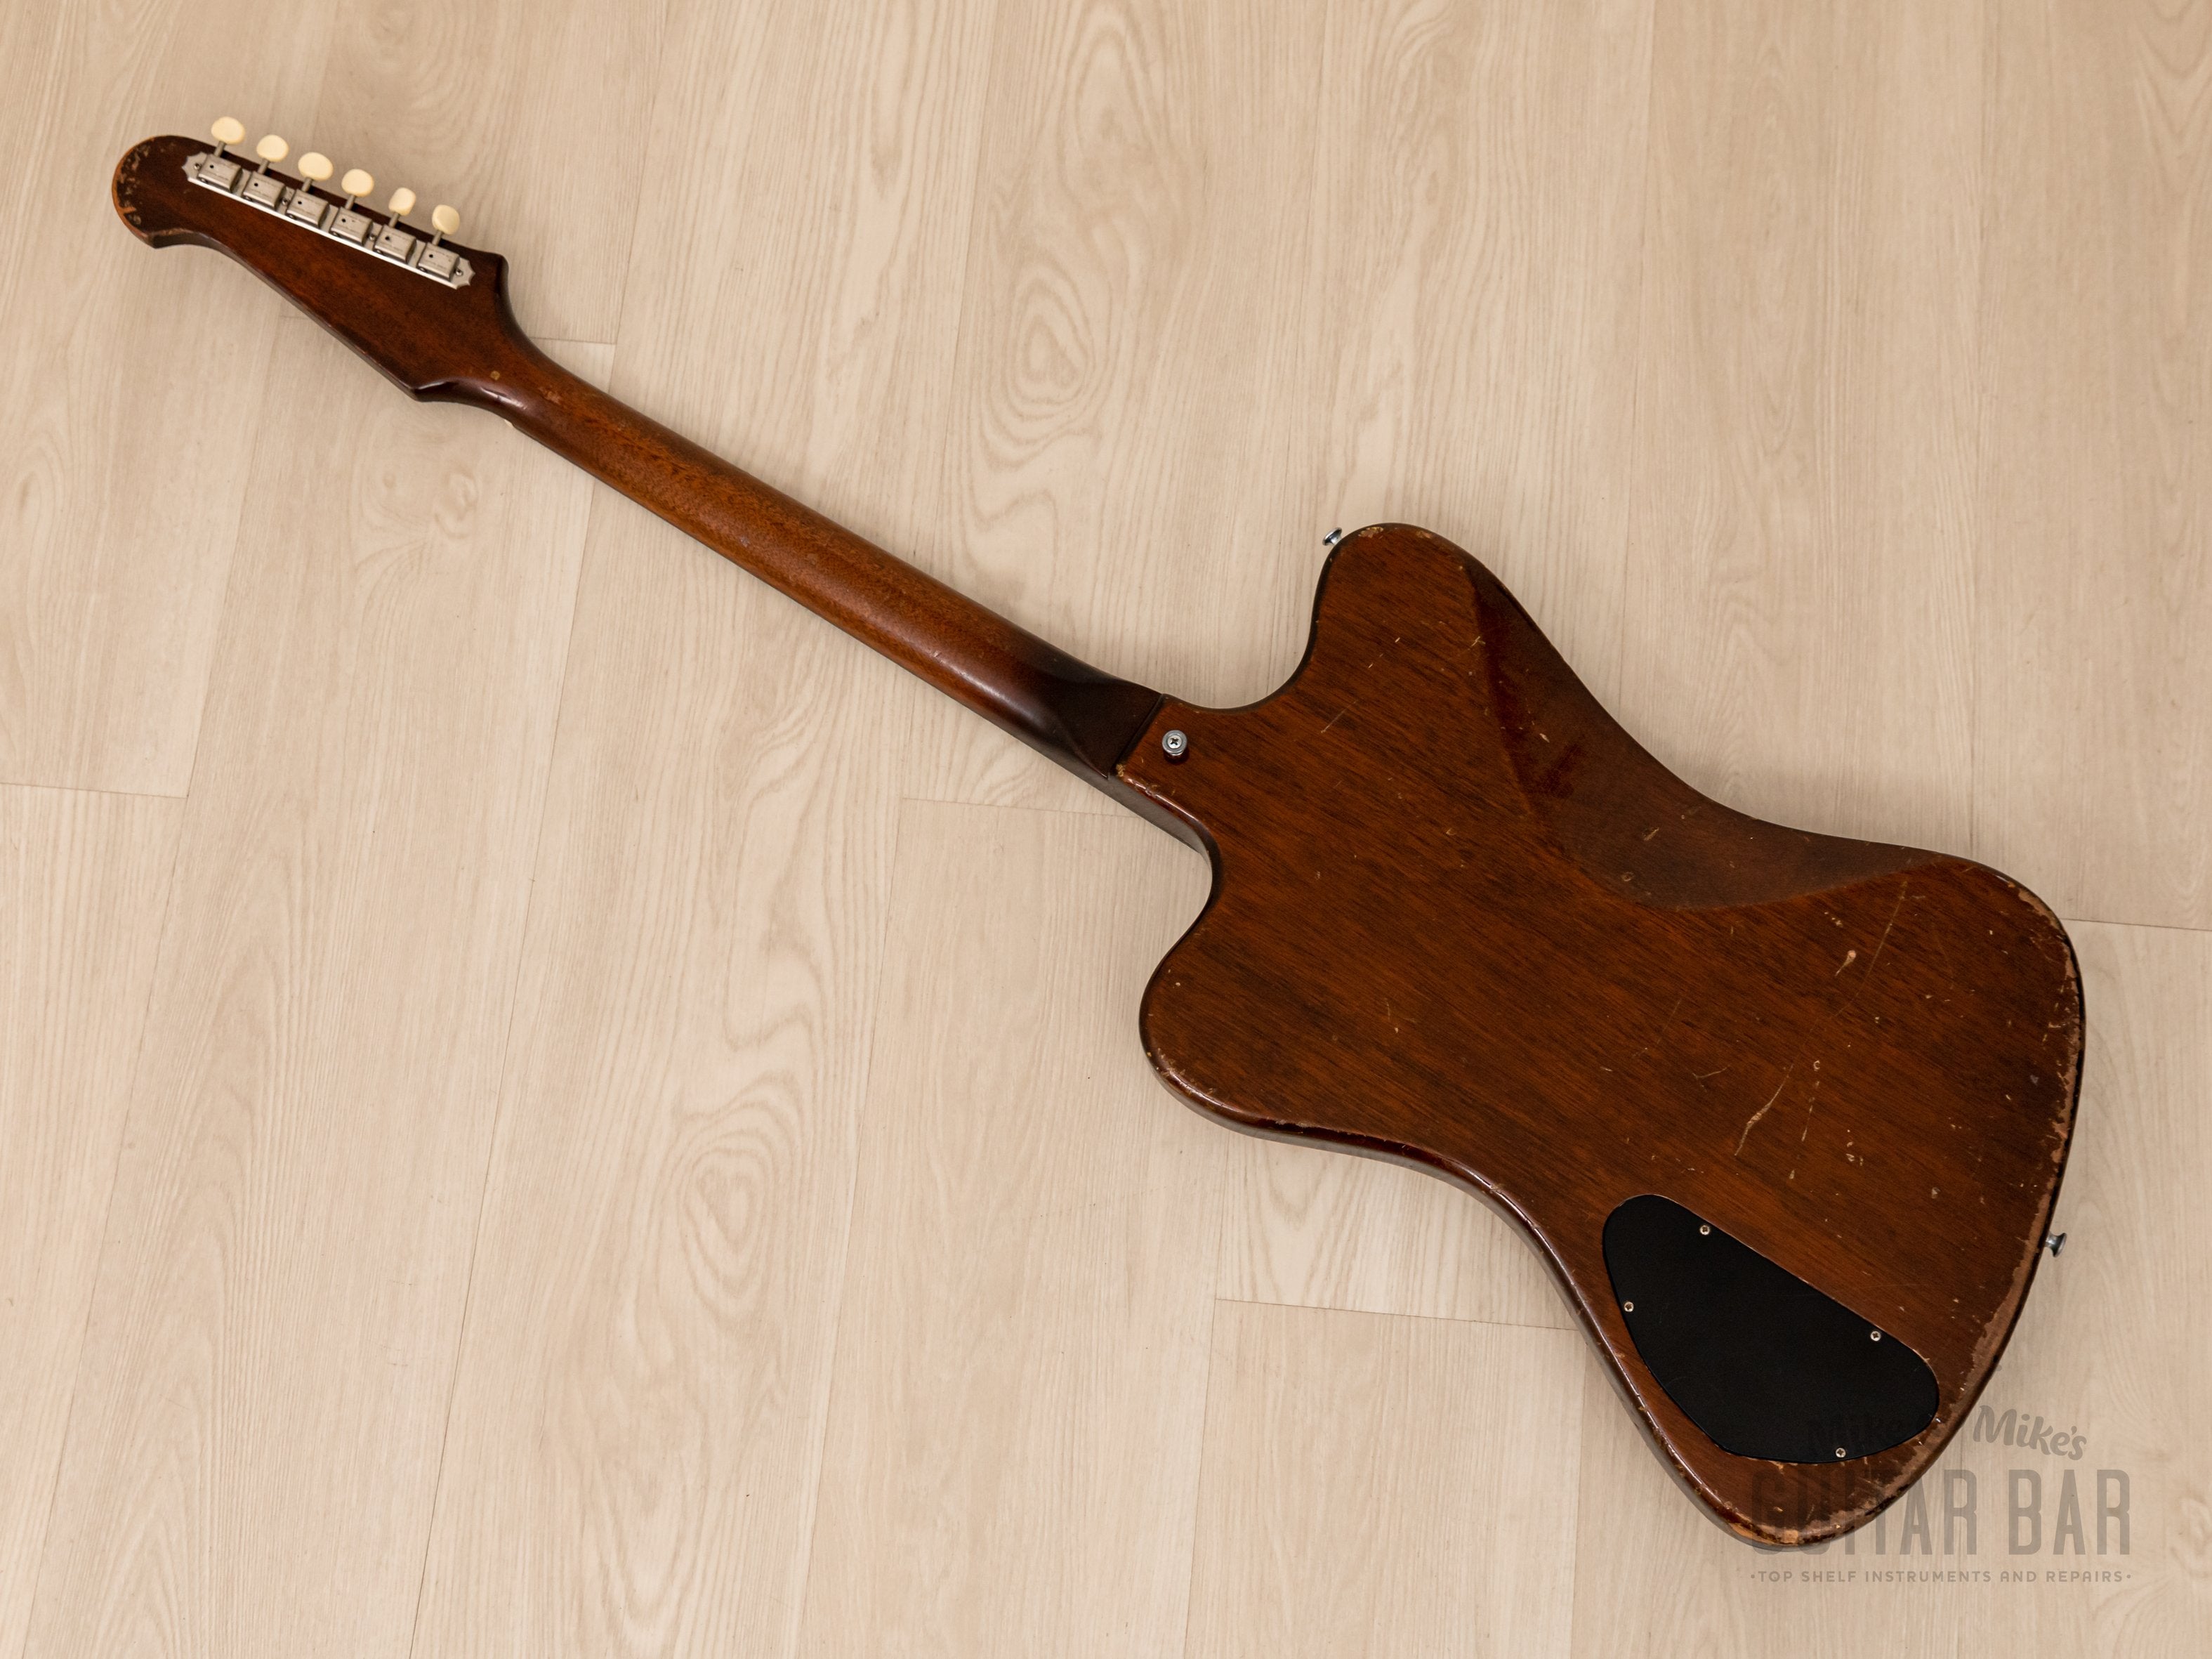 1965 Gibson Firebird III Non-Reverse Vintage Guitar Sunburst w/ Case